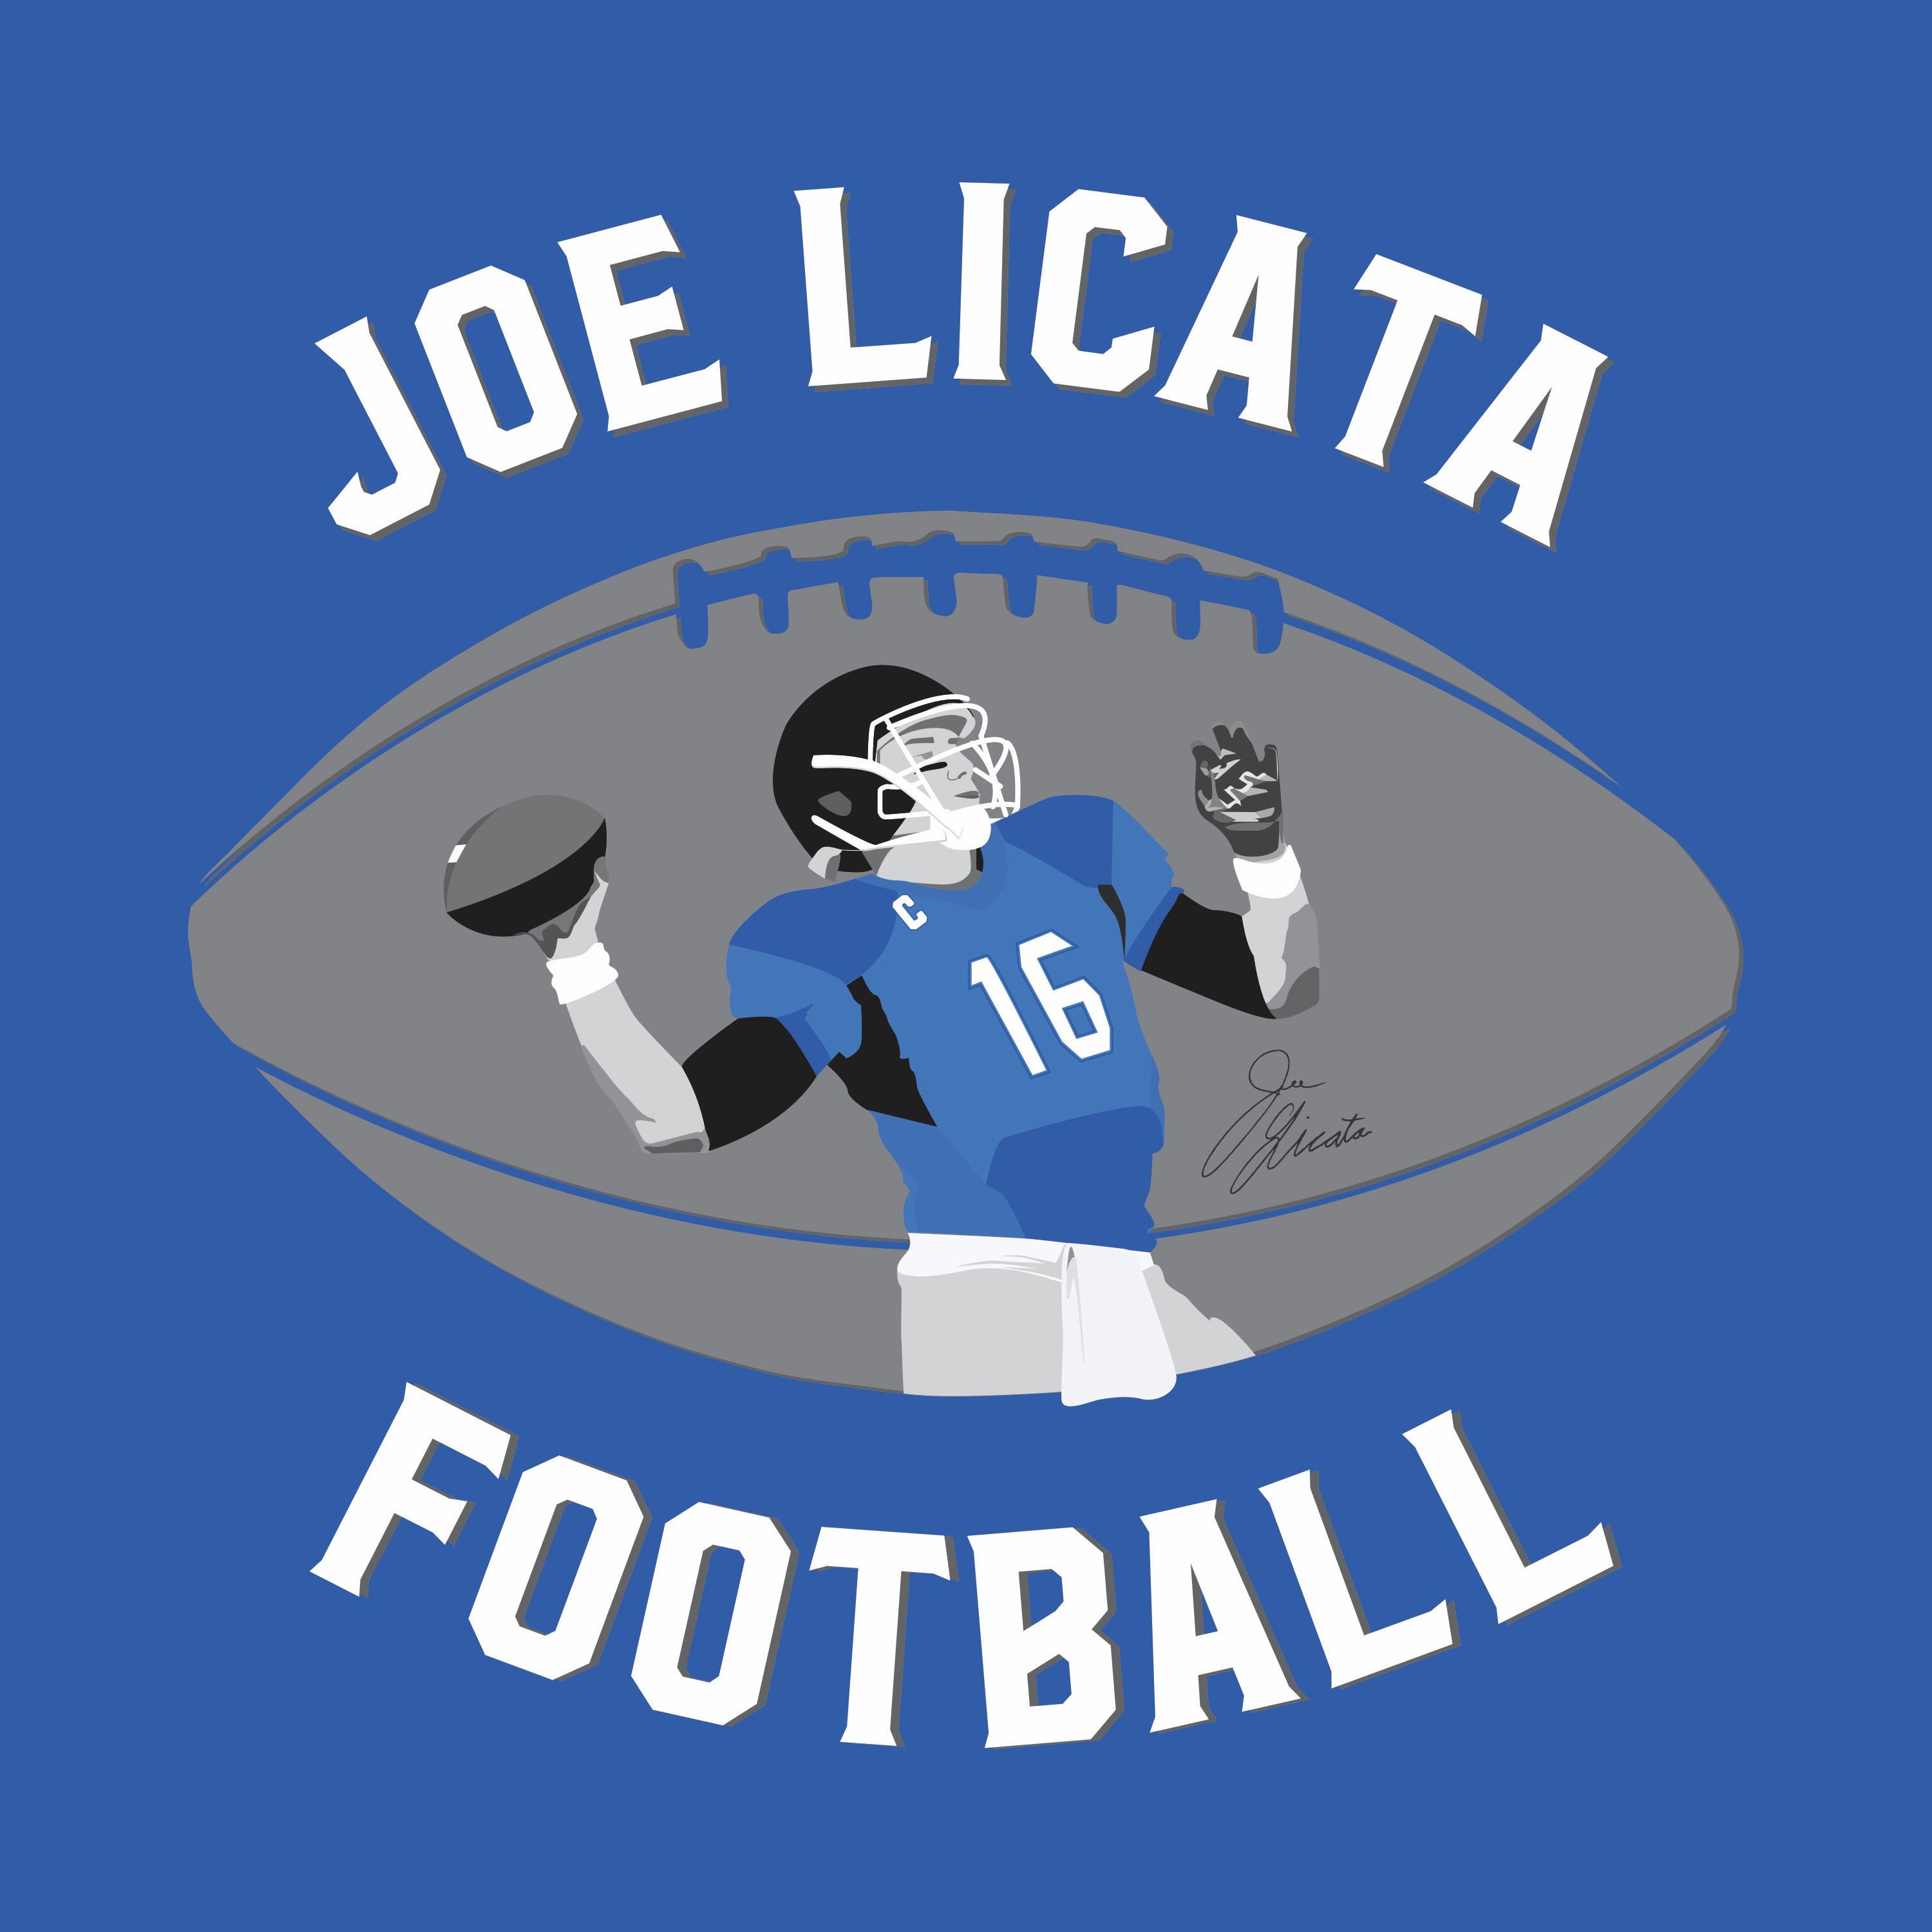 https://joelicatafootball.com/wp-content/uploads/2017/02/cropped-logo-big-2.jpg